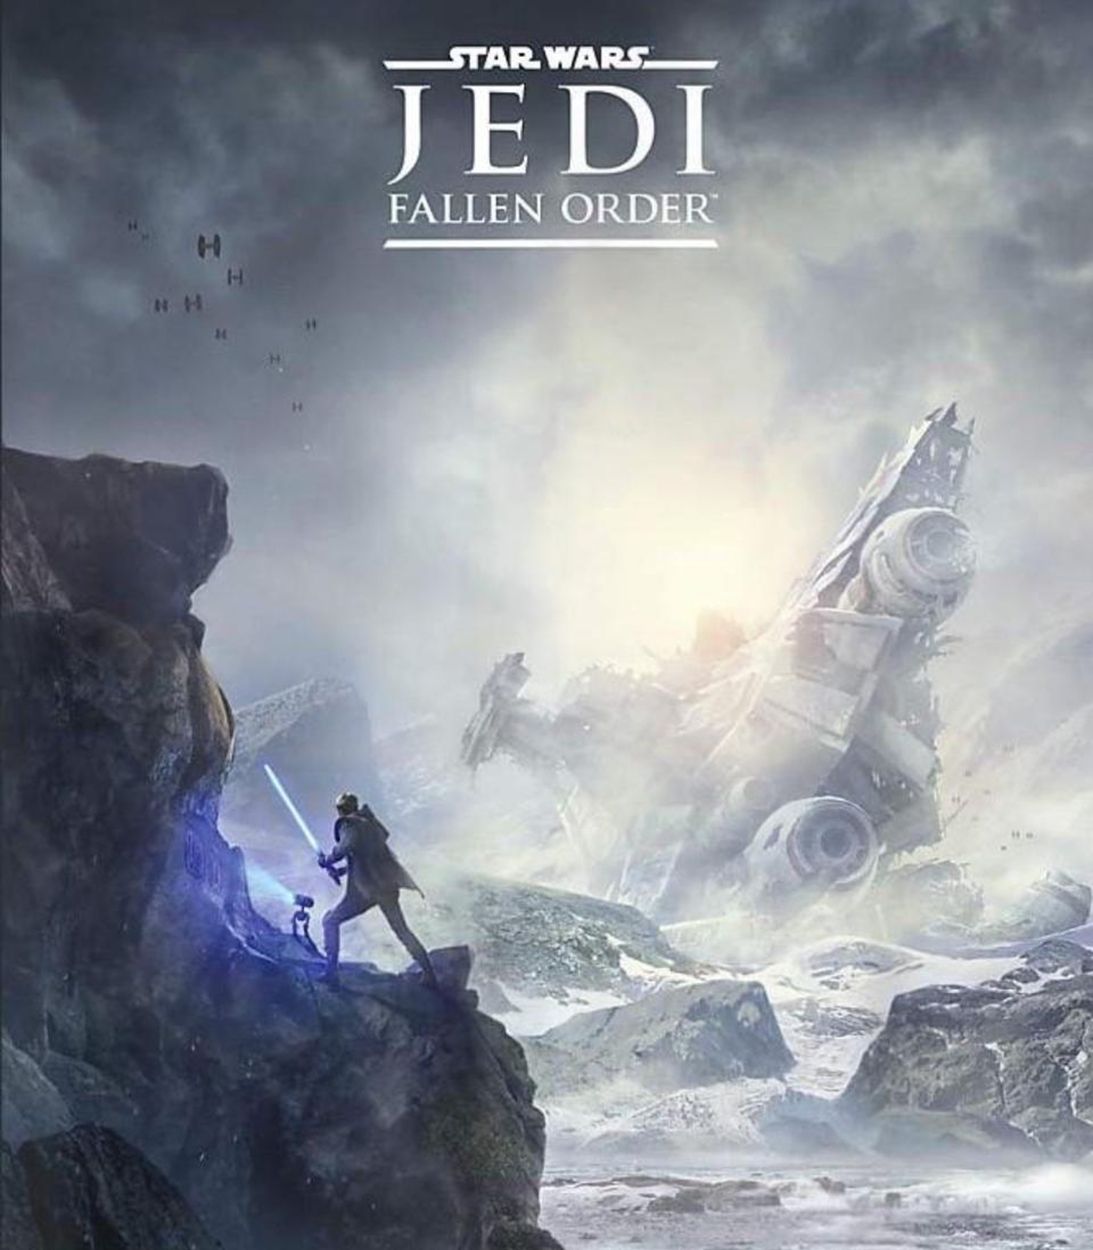 Star Wars Jedi Fallen Order Leaked Poster - Vertical